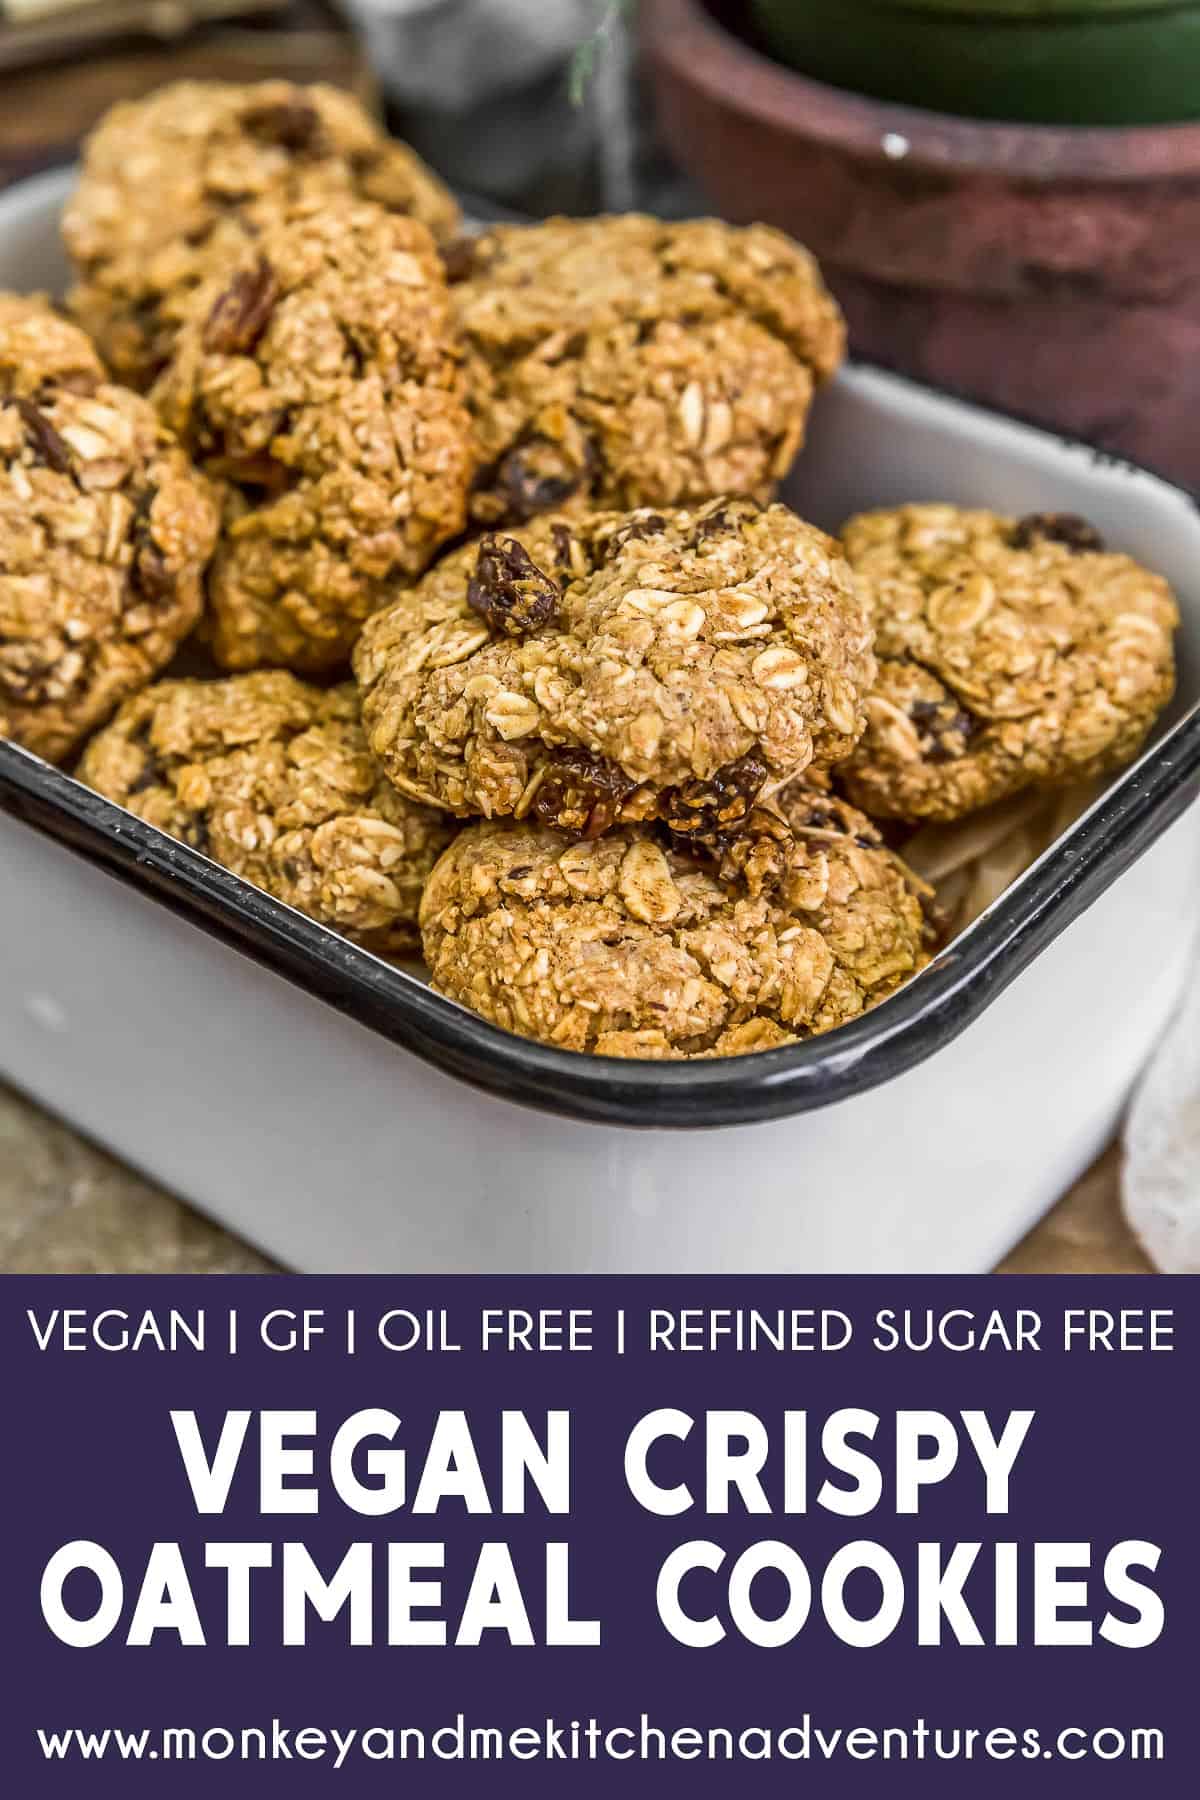 Vegan Crispy Oatmeal Cookies with text description